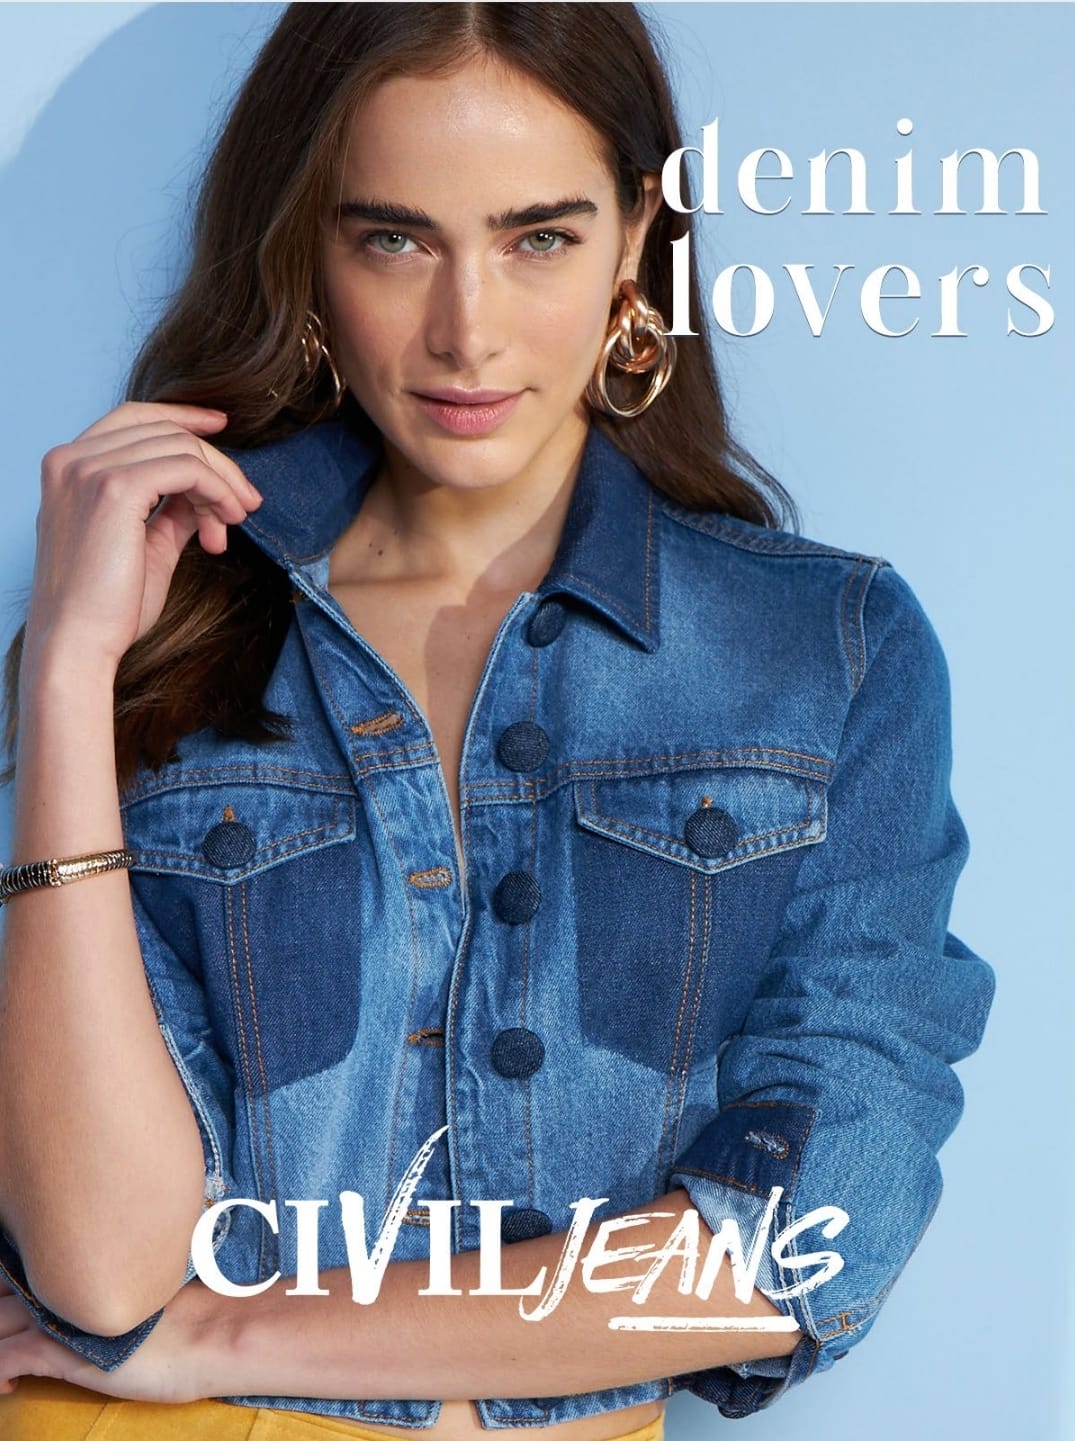 Civil Jeans Denim Lovers